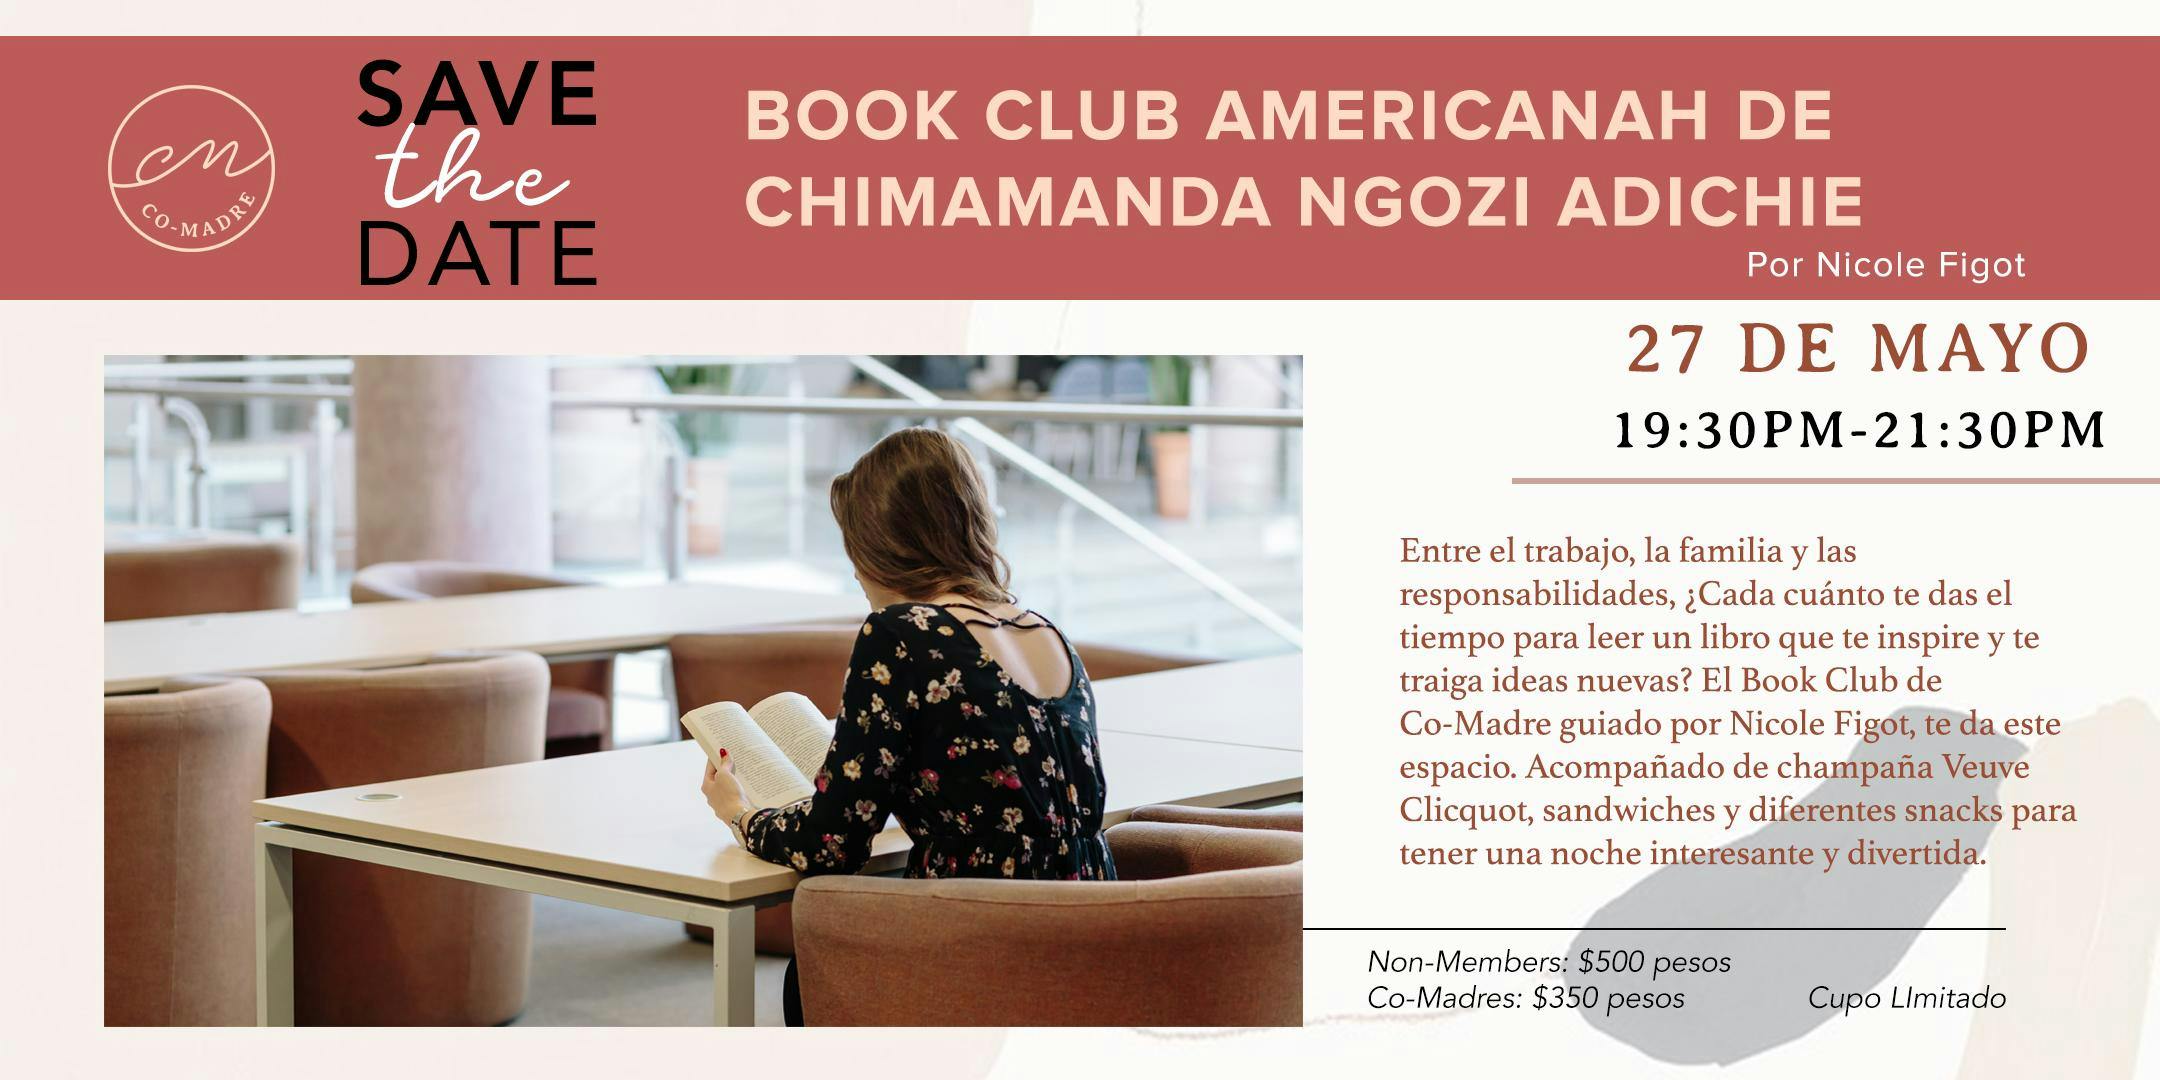 Book Club: Americhanah de Chimamanda Ngozi Adichie 